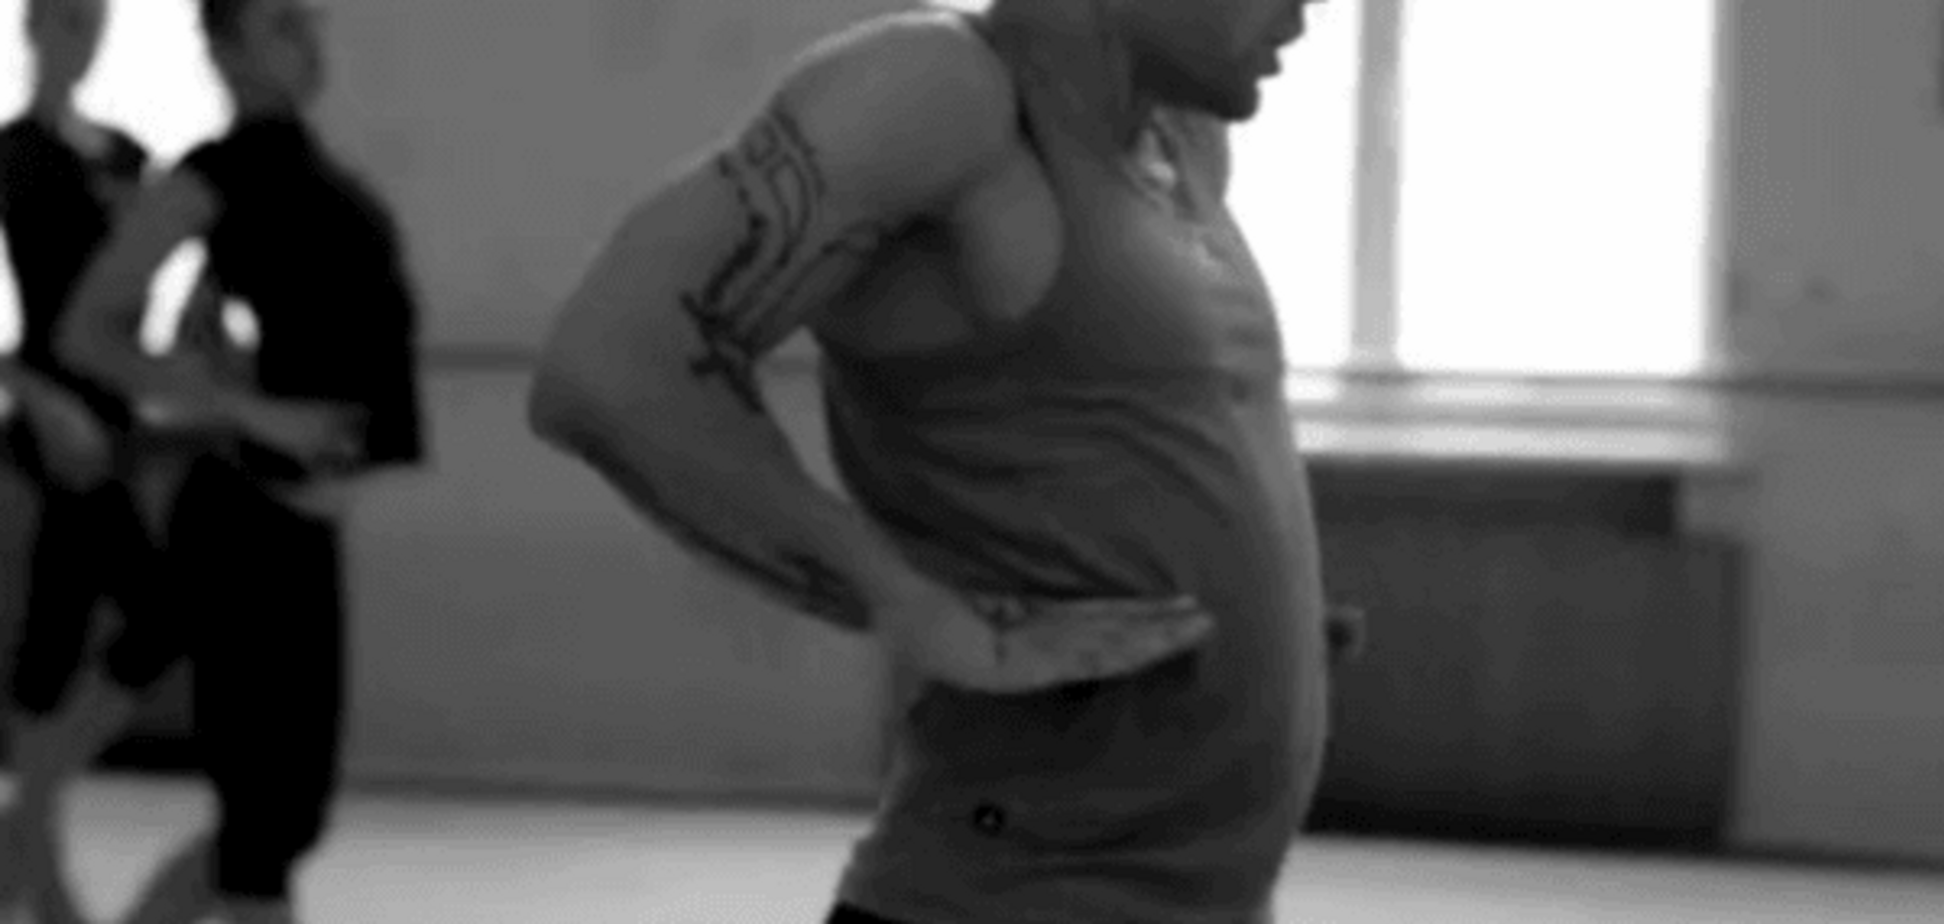 'Танцующий на каблуках' Жежель из группы Kazaky устроил мастер-класс украинским гимнасткам: видеофакт